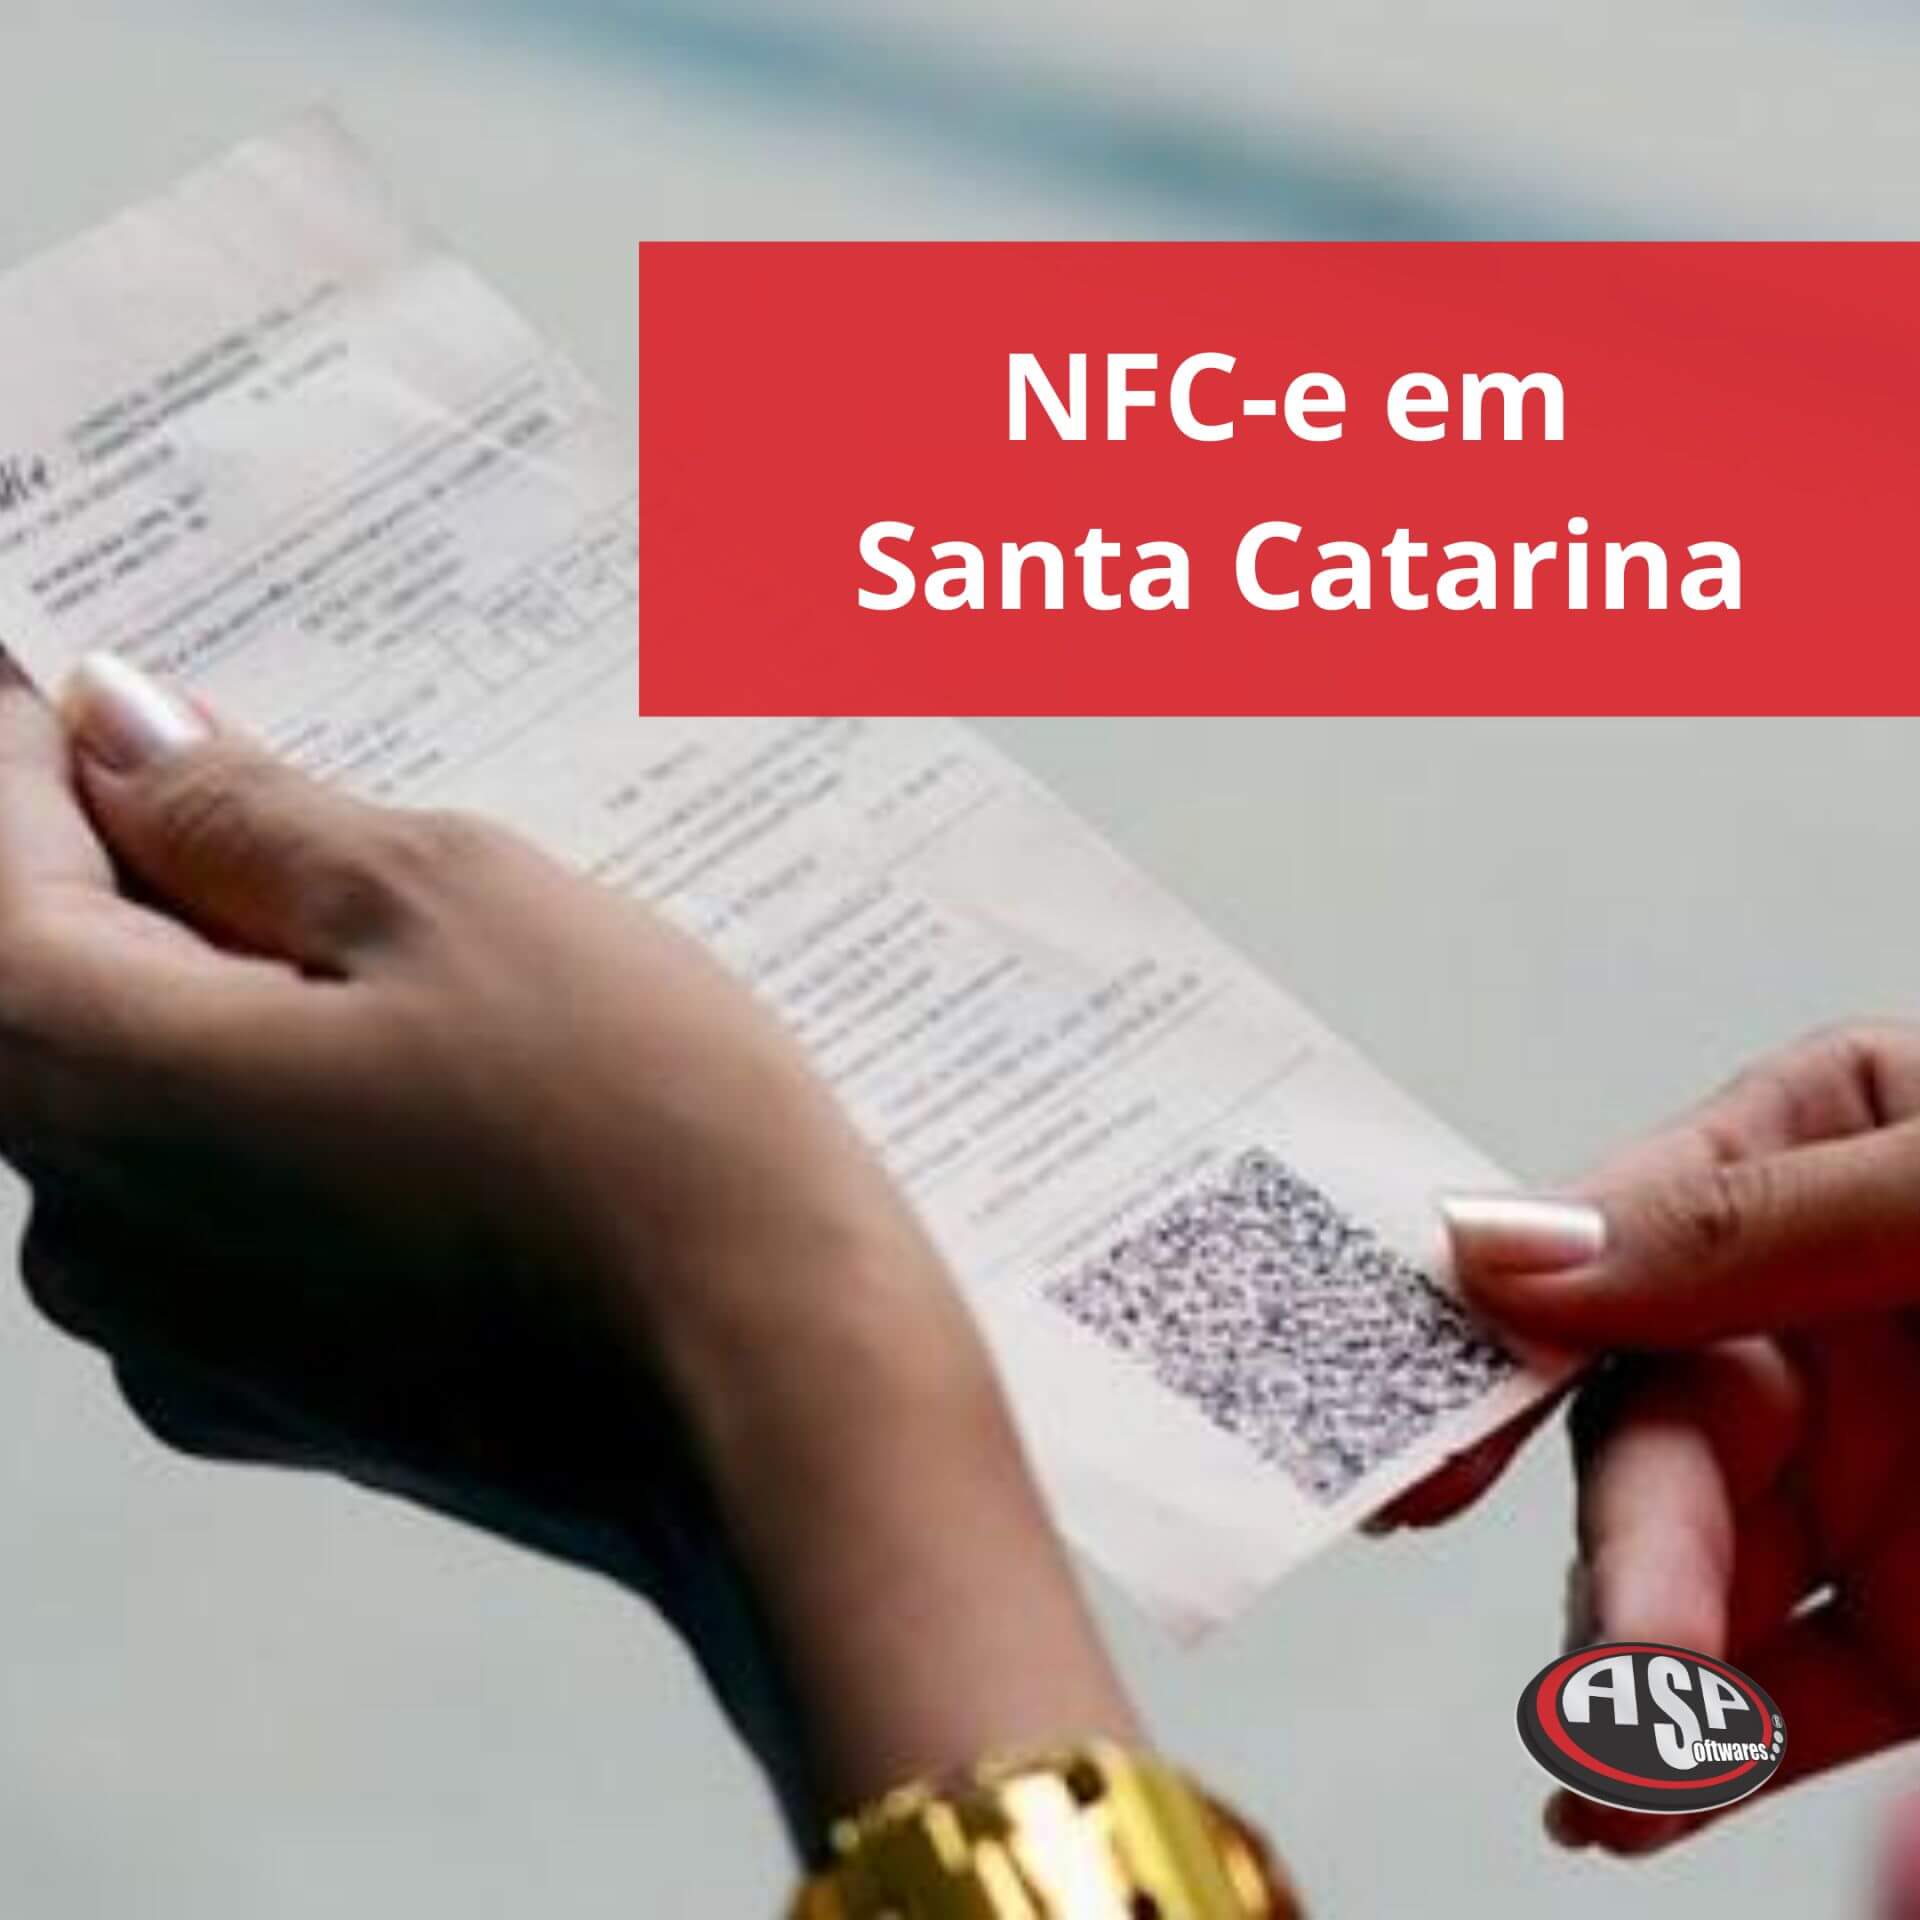 NFC-e em Santa Catarina